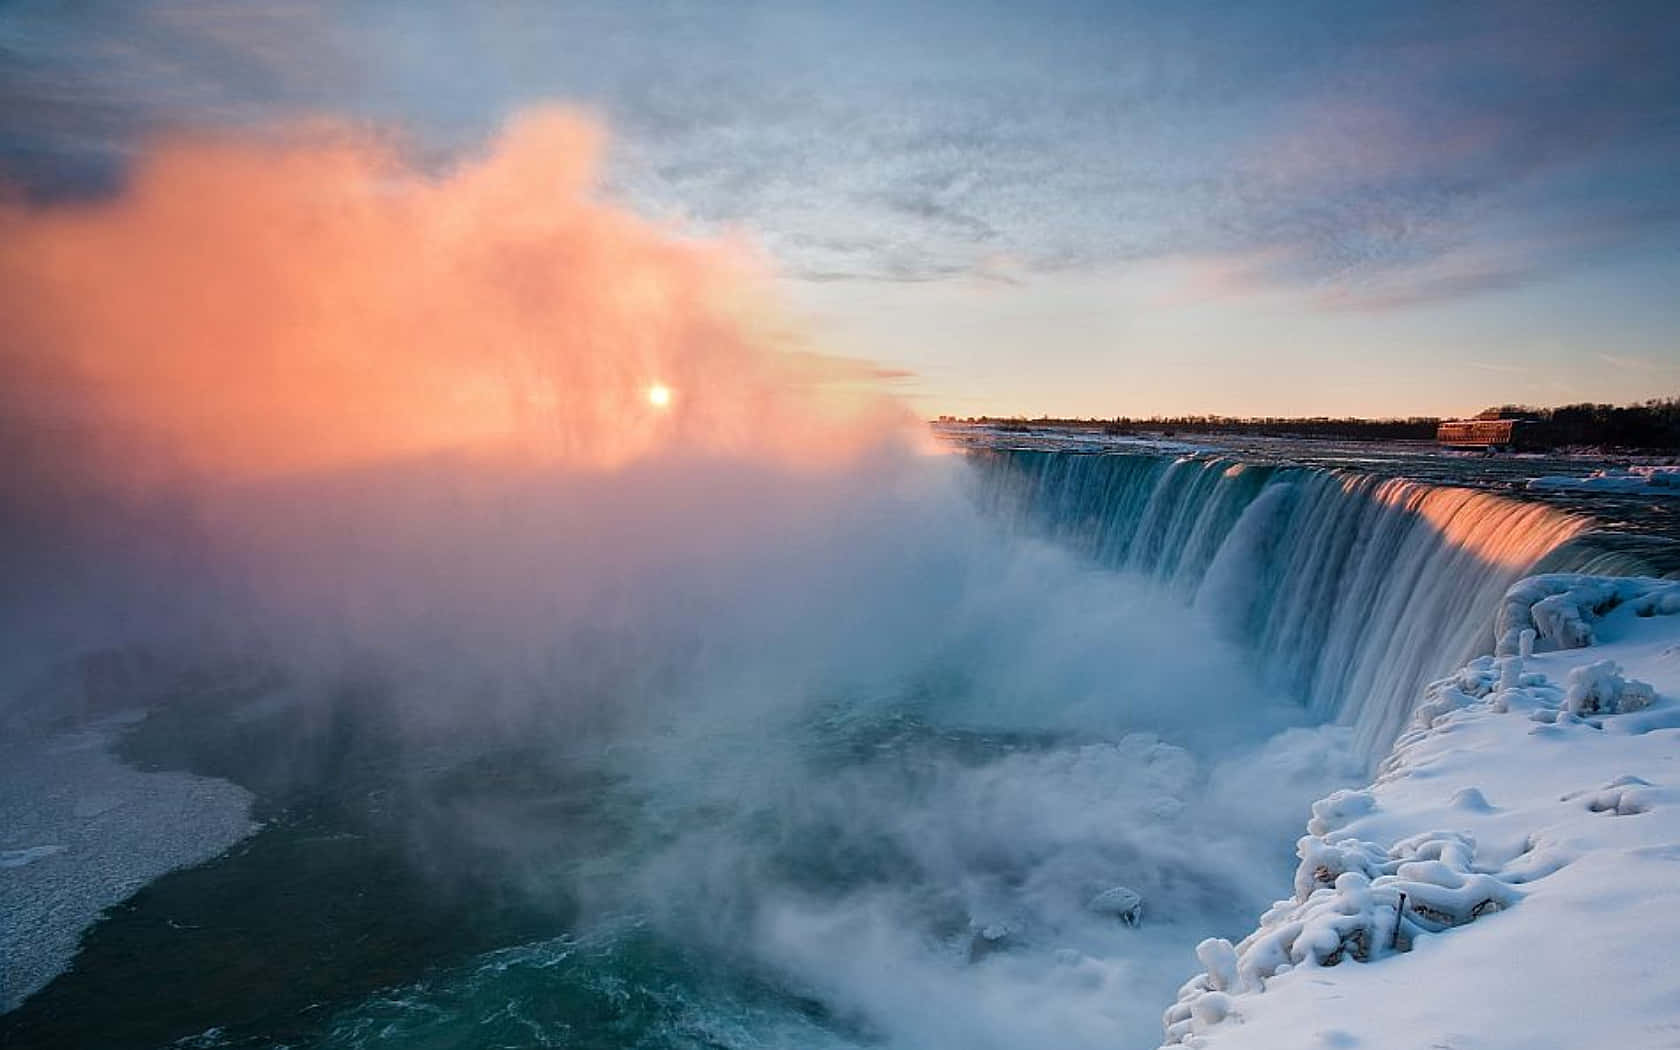 Enjoy the beauty of Niagara Falls in 720p